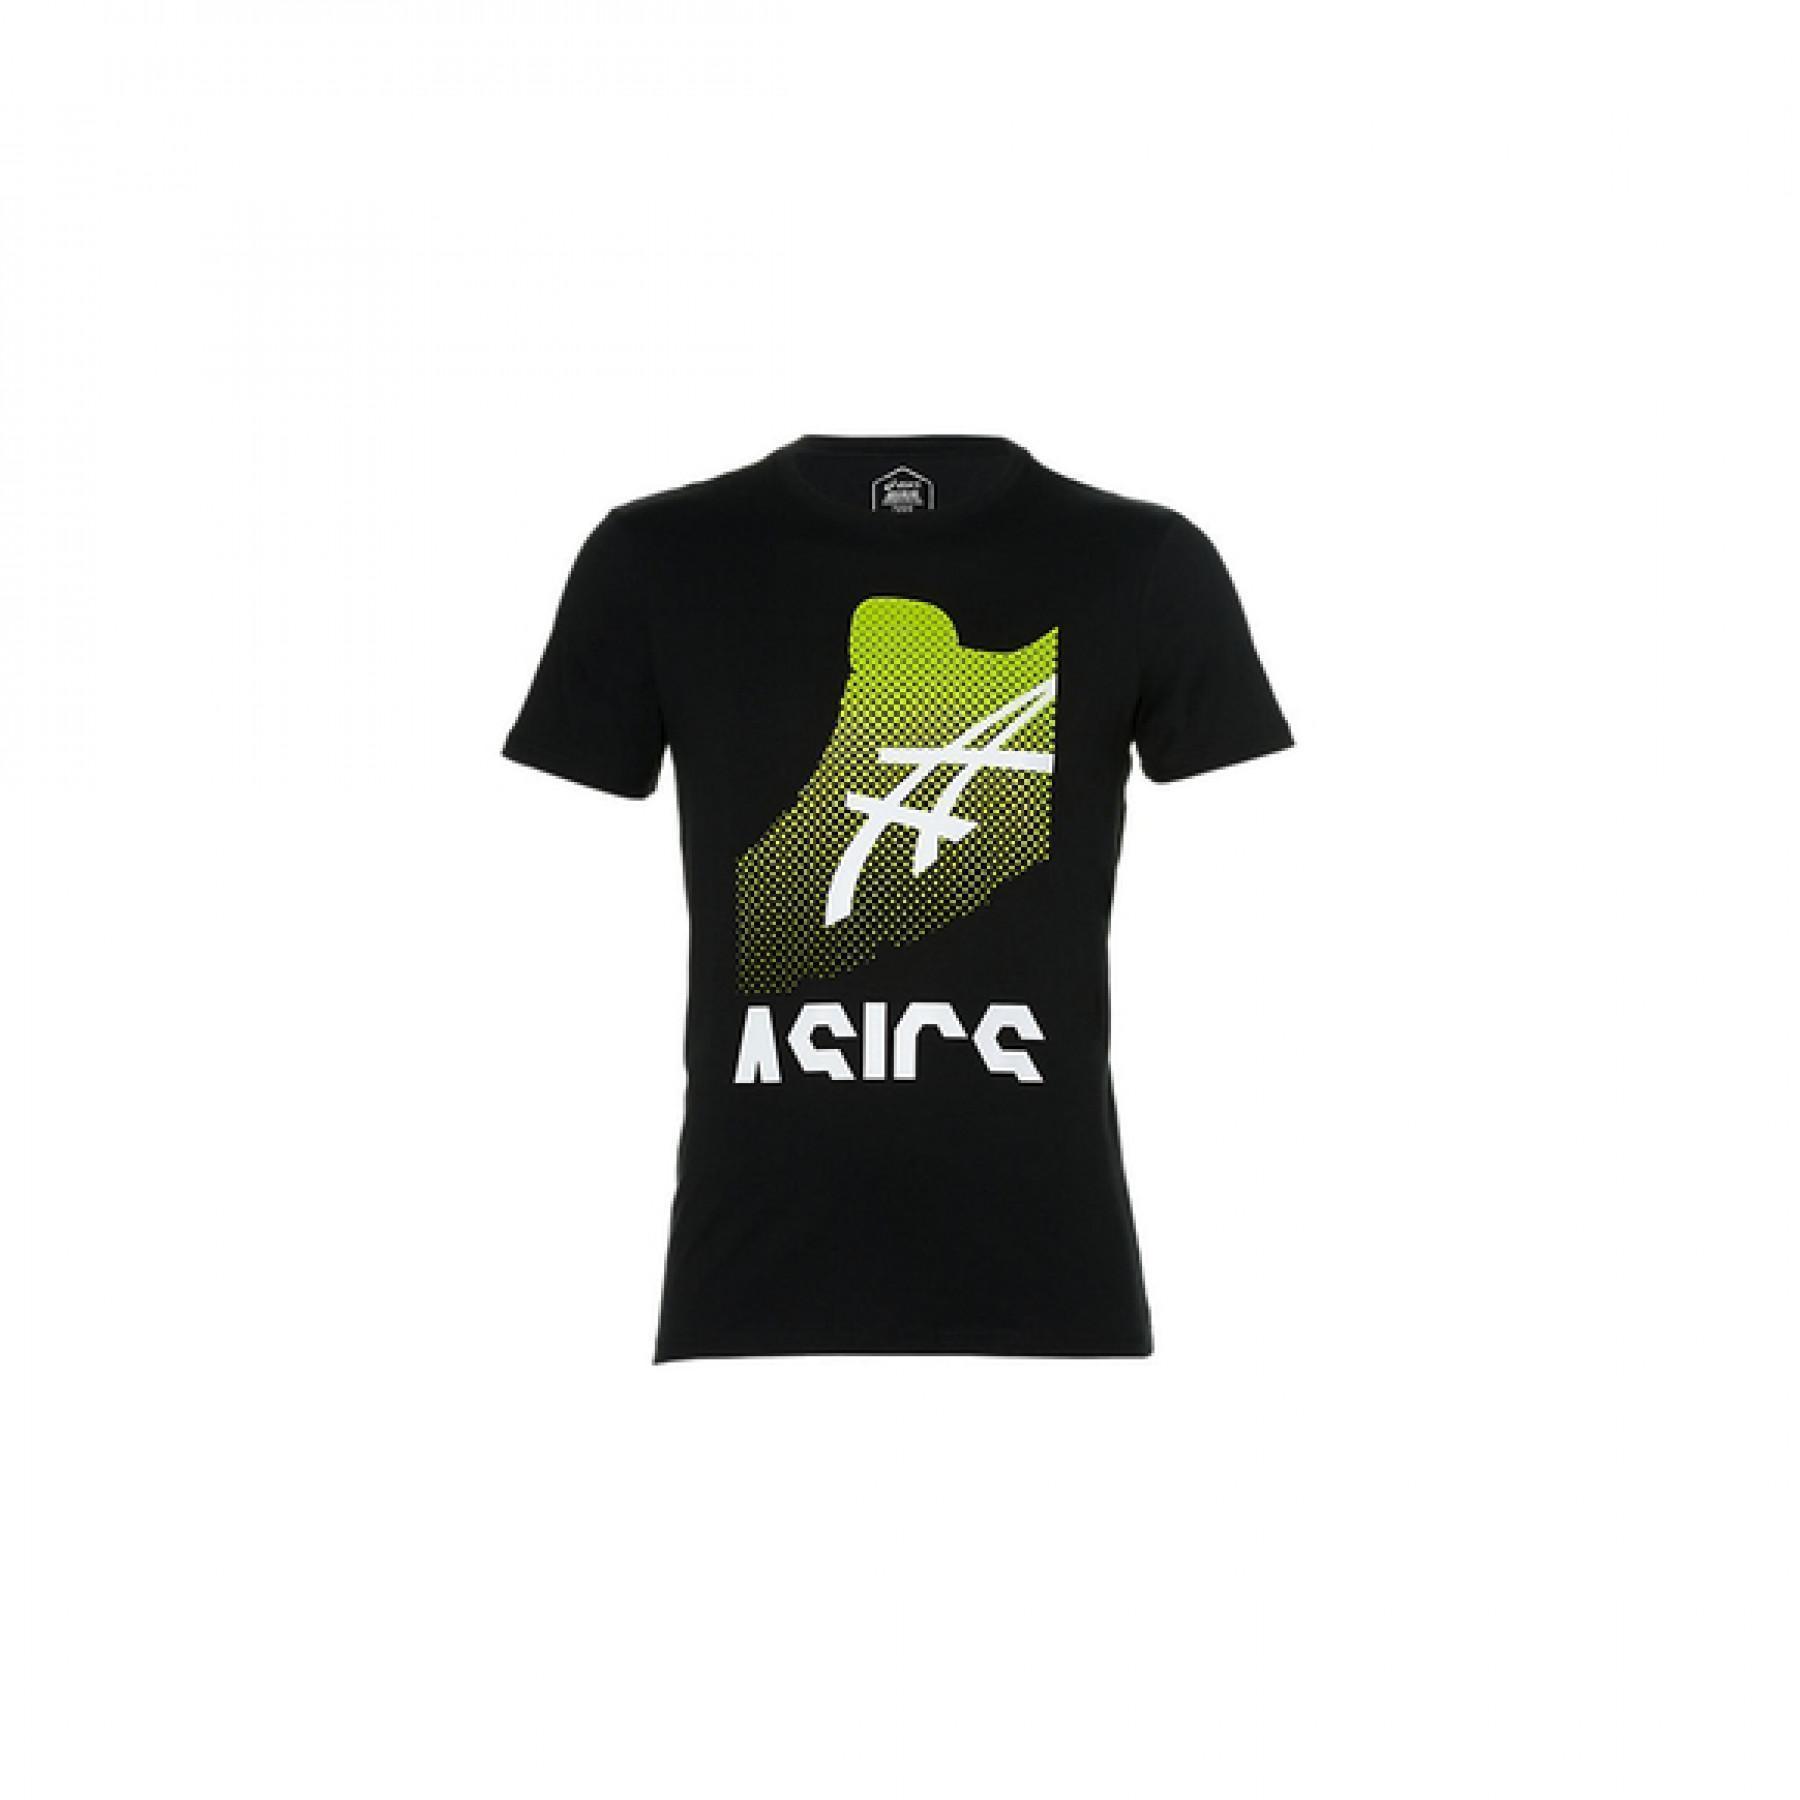 T-shirt Asics Gpx kayano